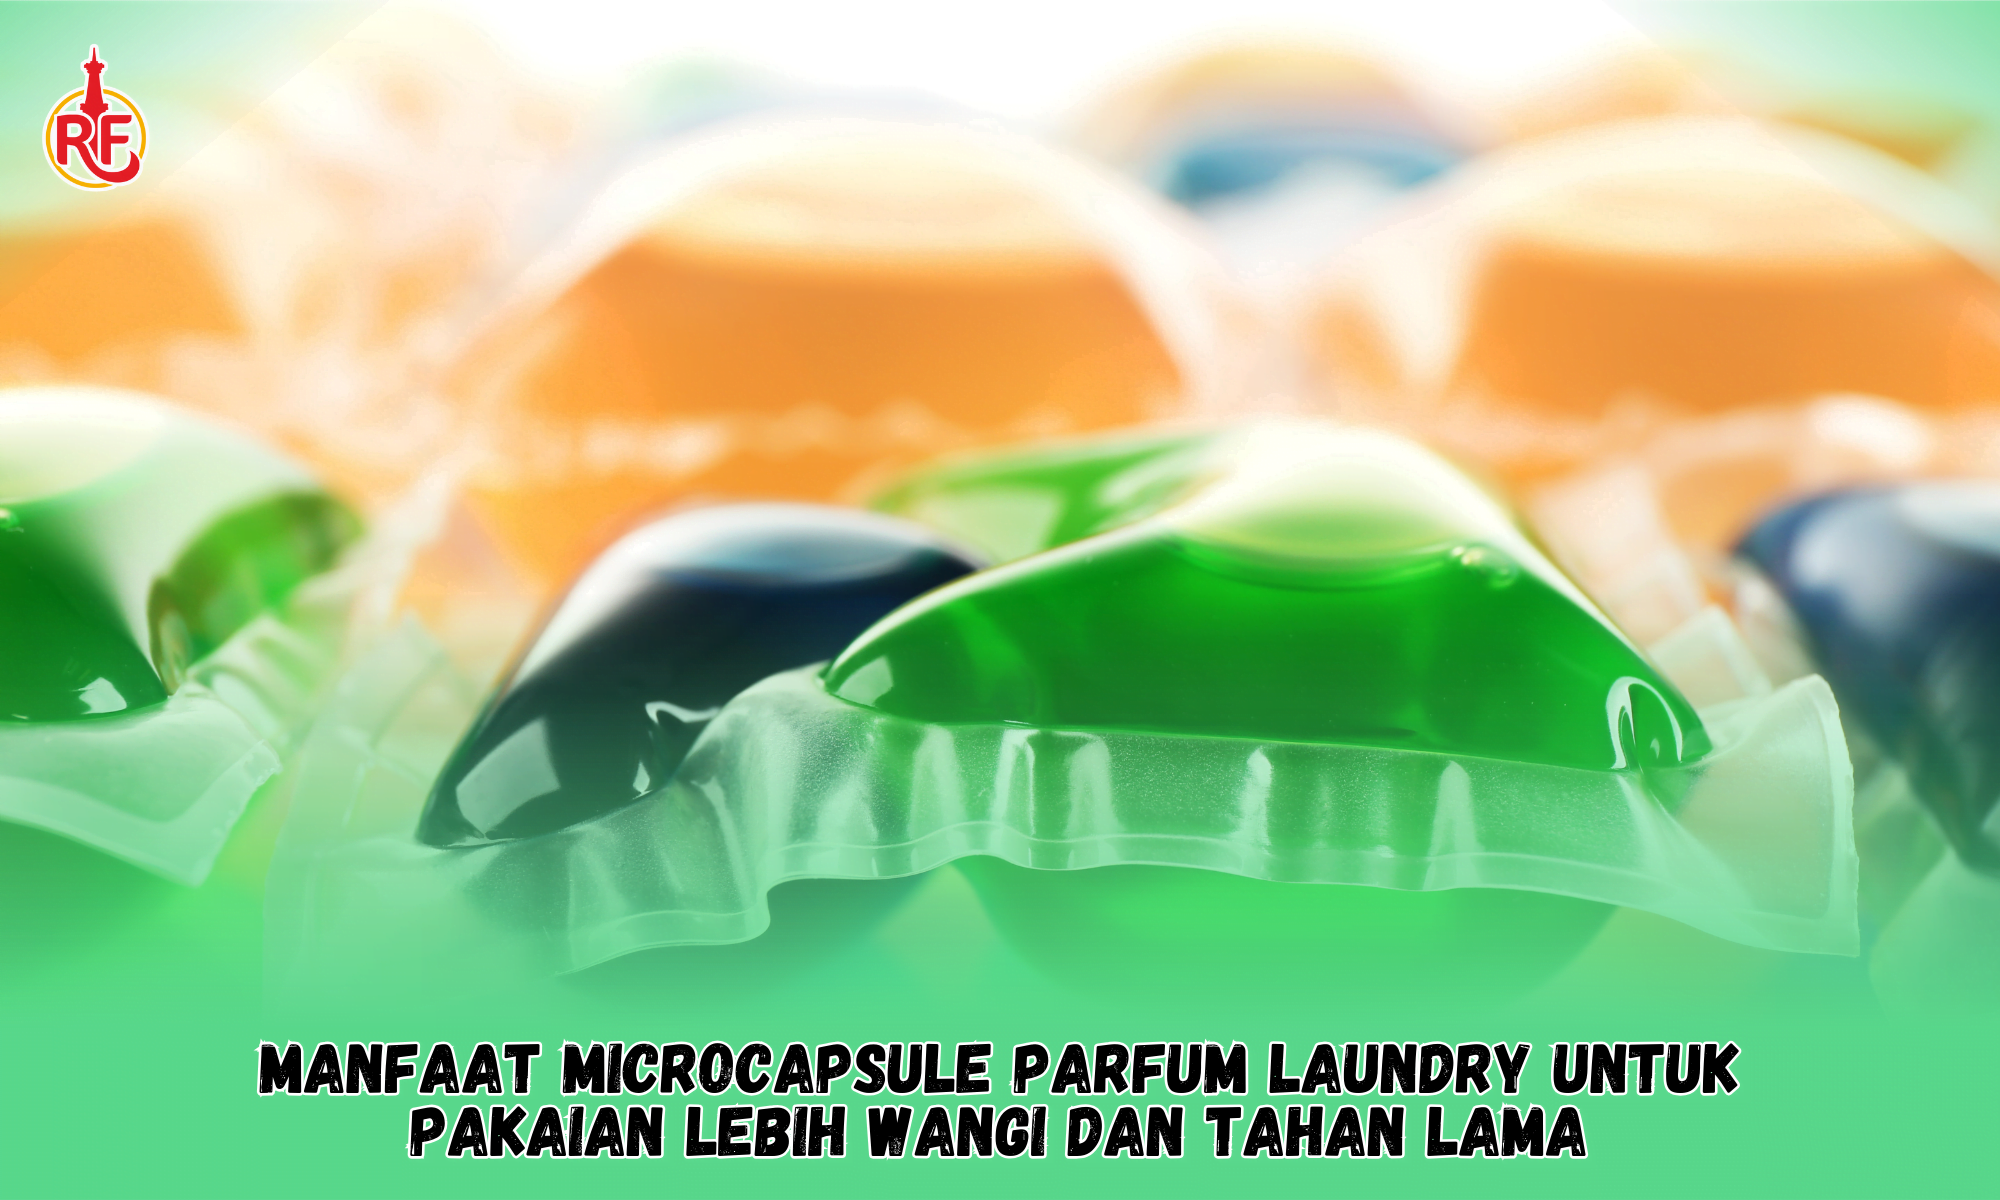 Manfaat Parfum Laundry Microcapsule